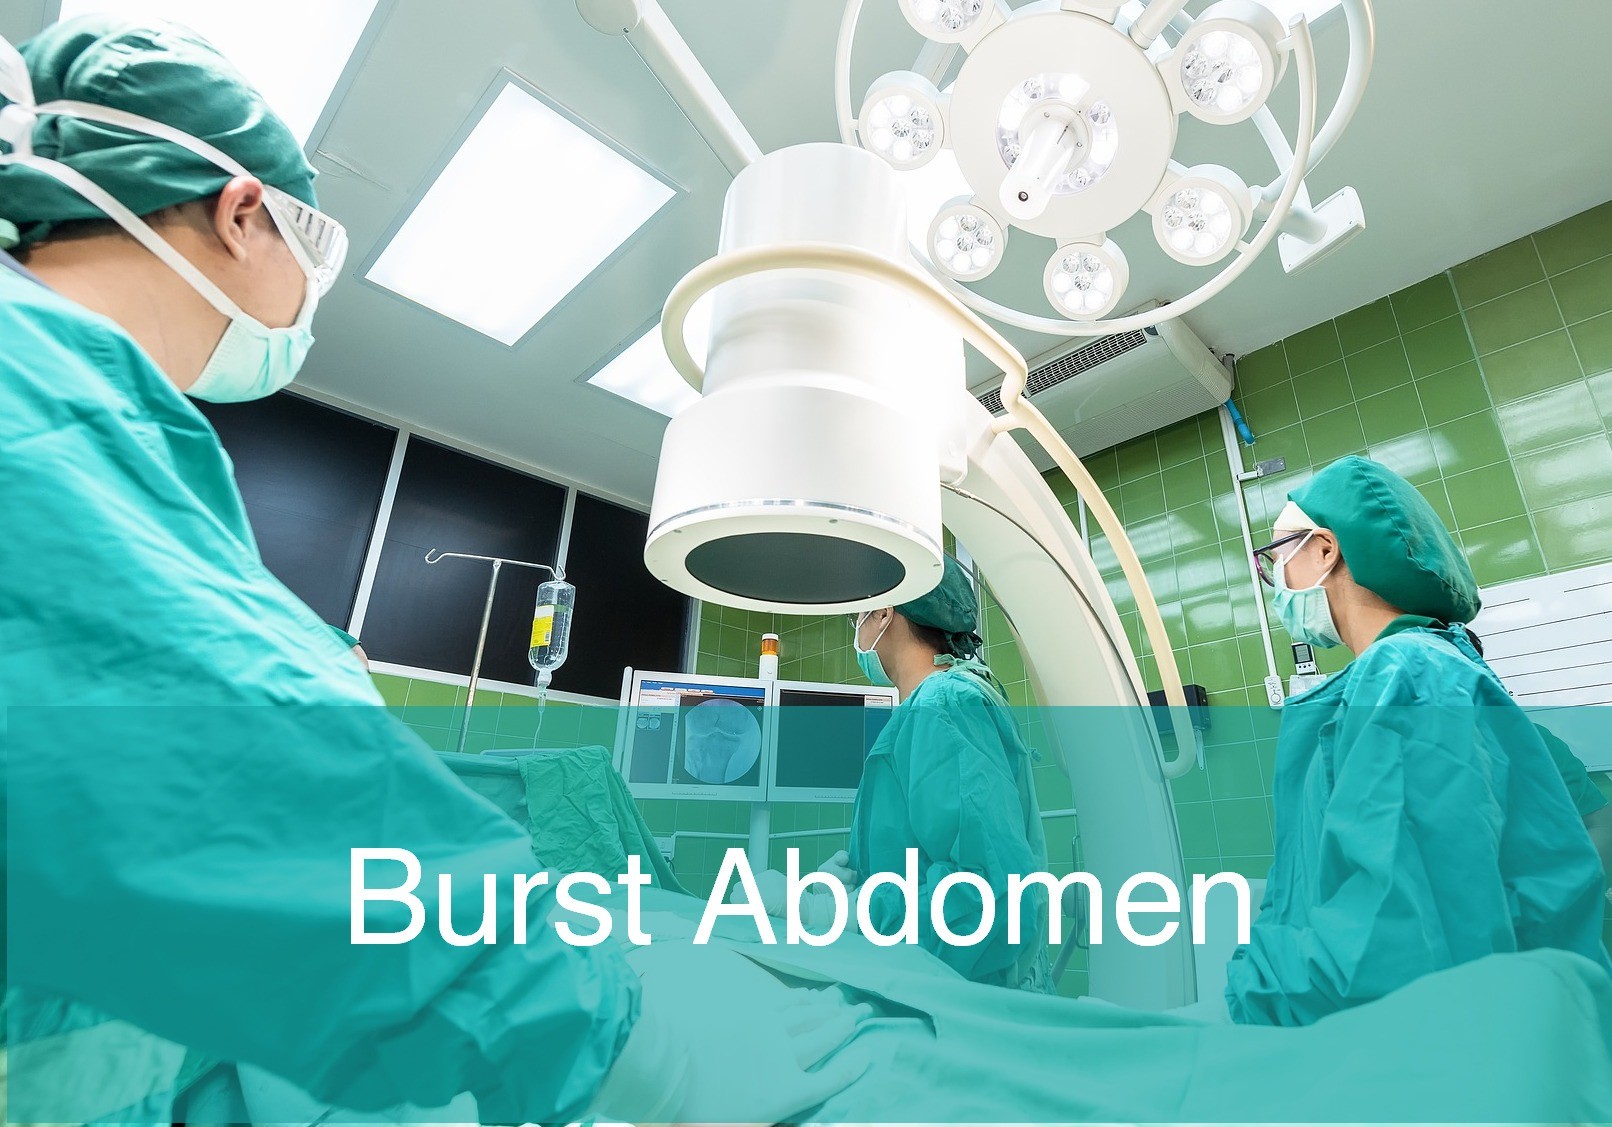 Burst Abdomen: Contributing factors and Treatment